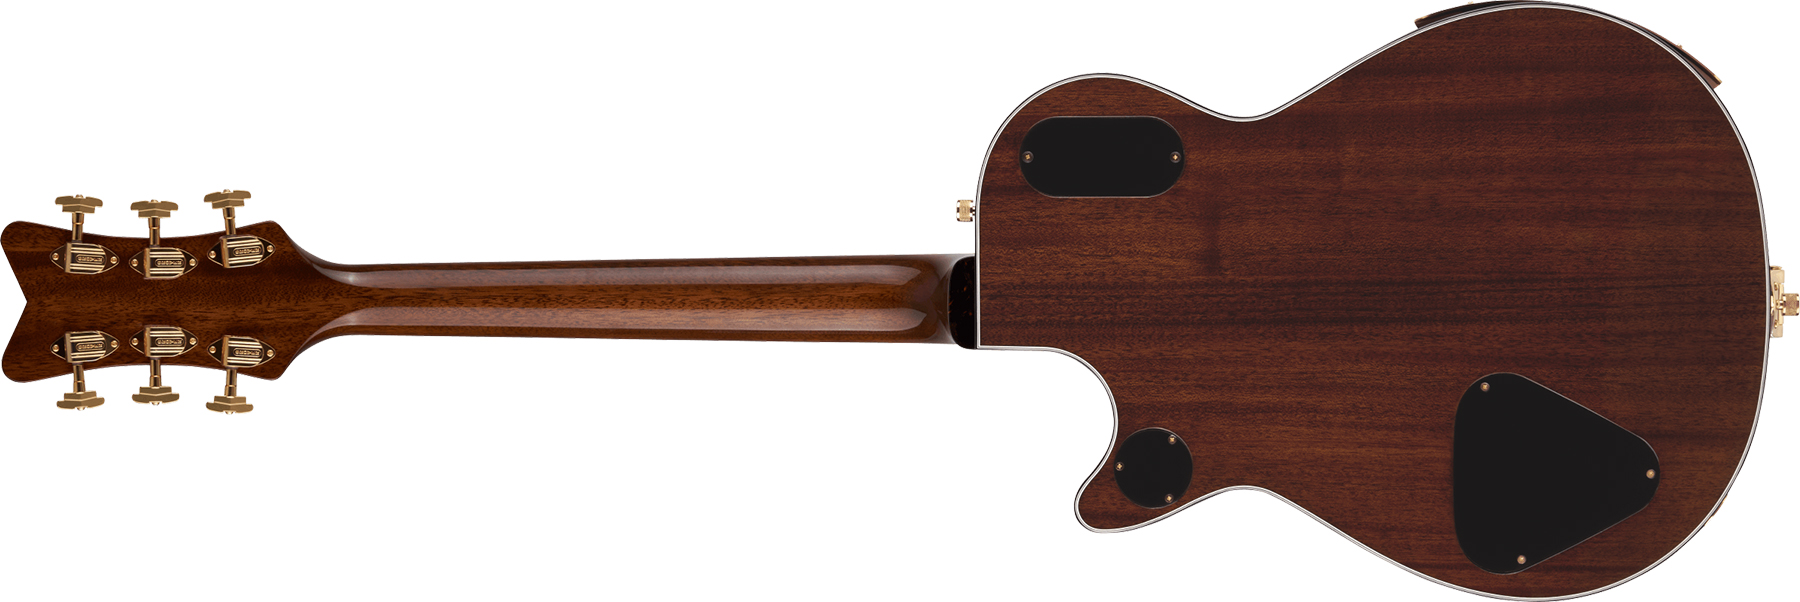 Gretsch G6134t-ltd Penguin Koa Bigsby Pro Jap 2h Trem Eb - Natural - Enkel gesneden elektrische gitaar - Variation 1